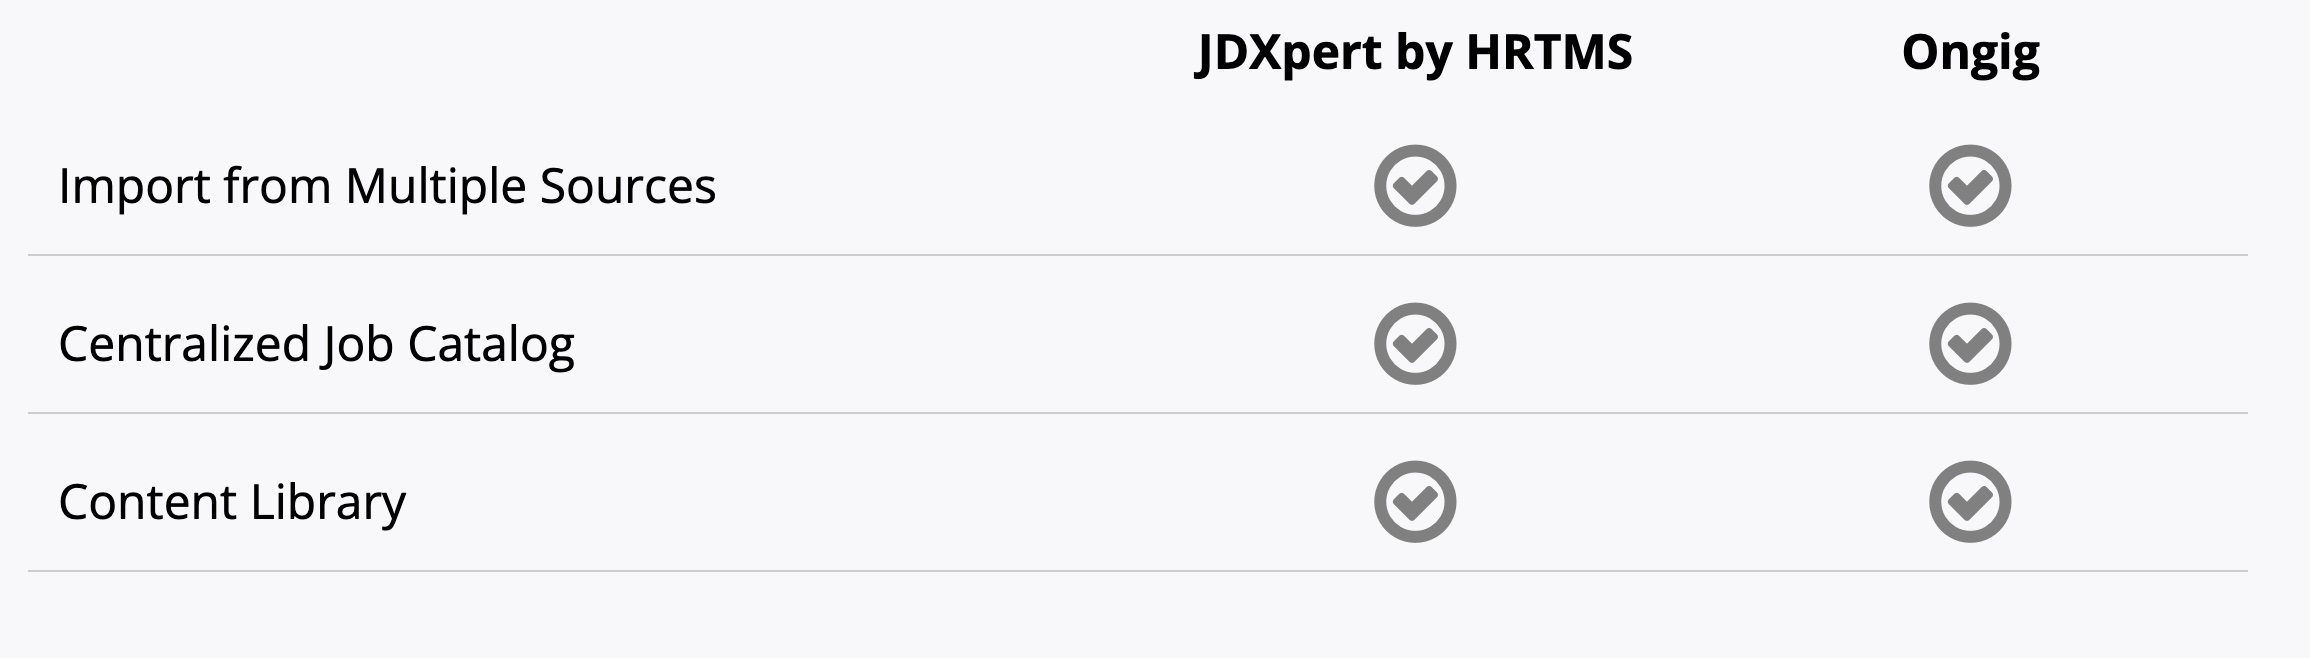 jdxpert-ongig-comparison-jd-library